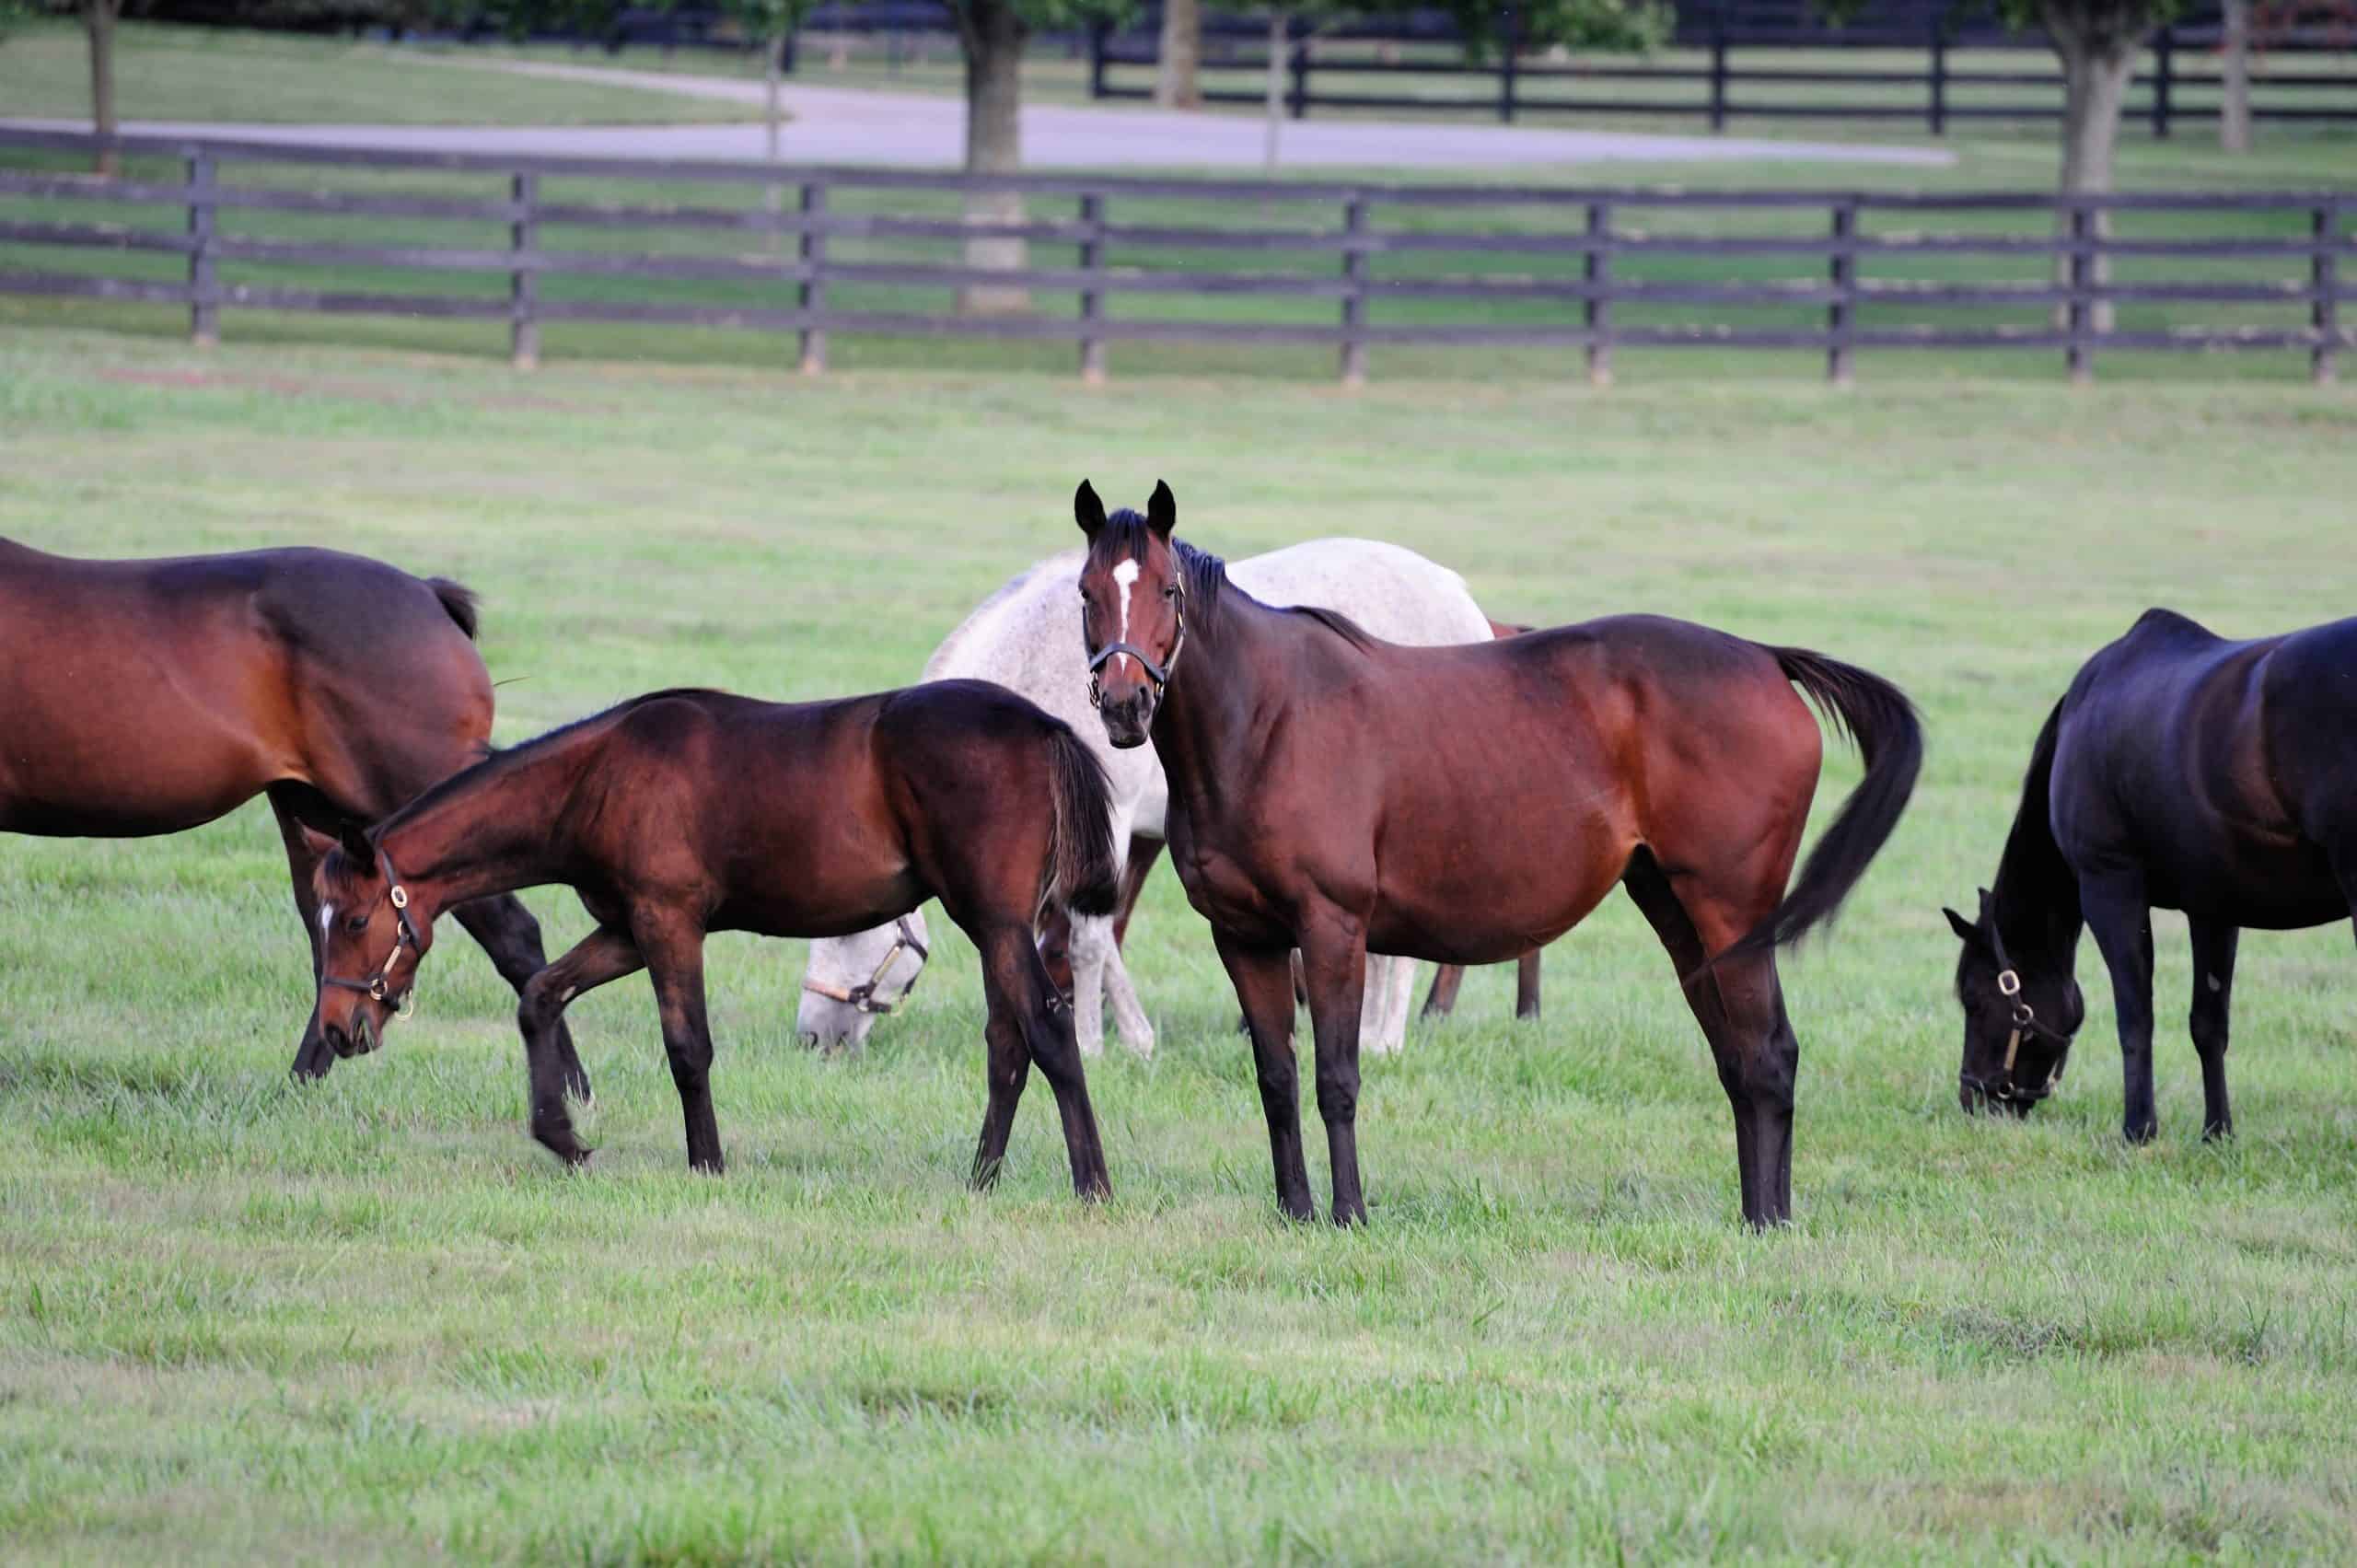 horses on a horse farm in Kentucky (USA)